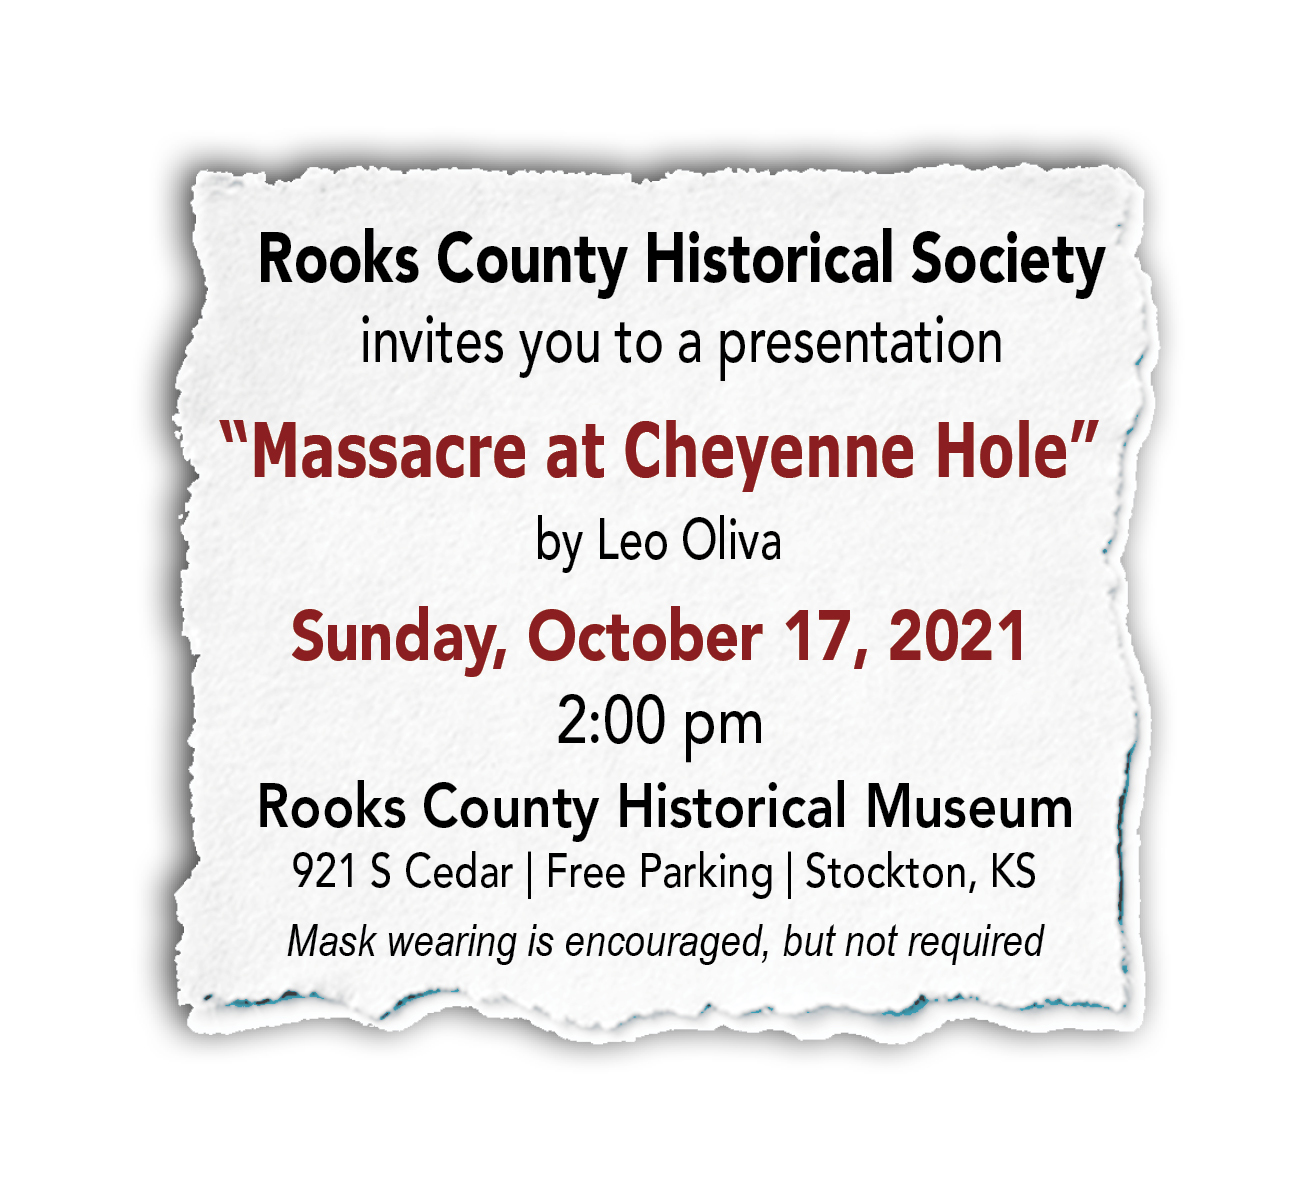 Rooks County Historical Society announces Massacre at Cheyenne Hole